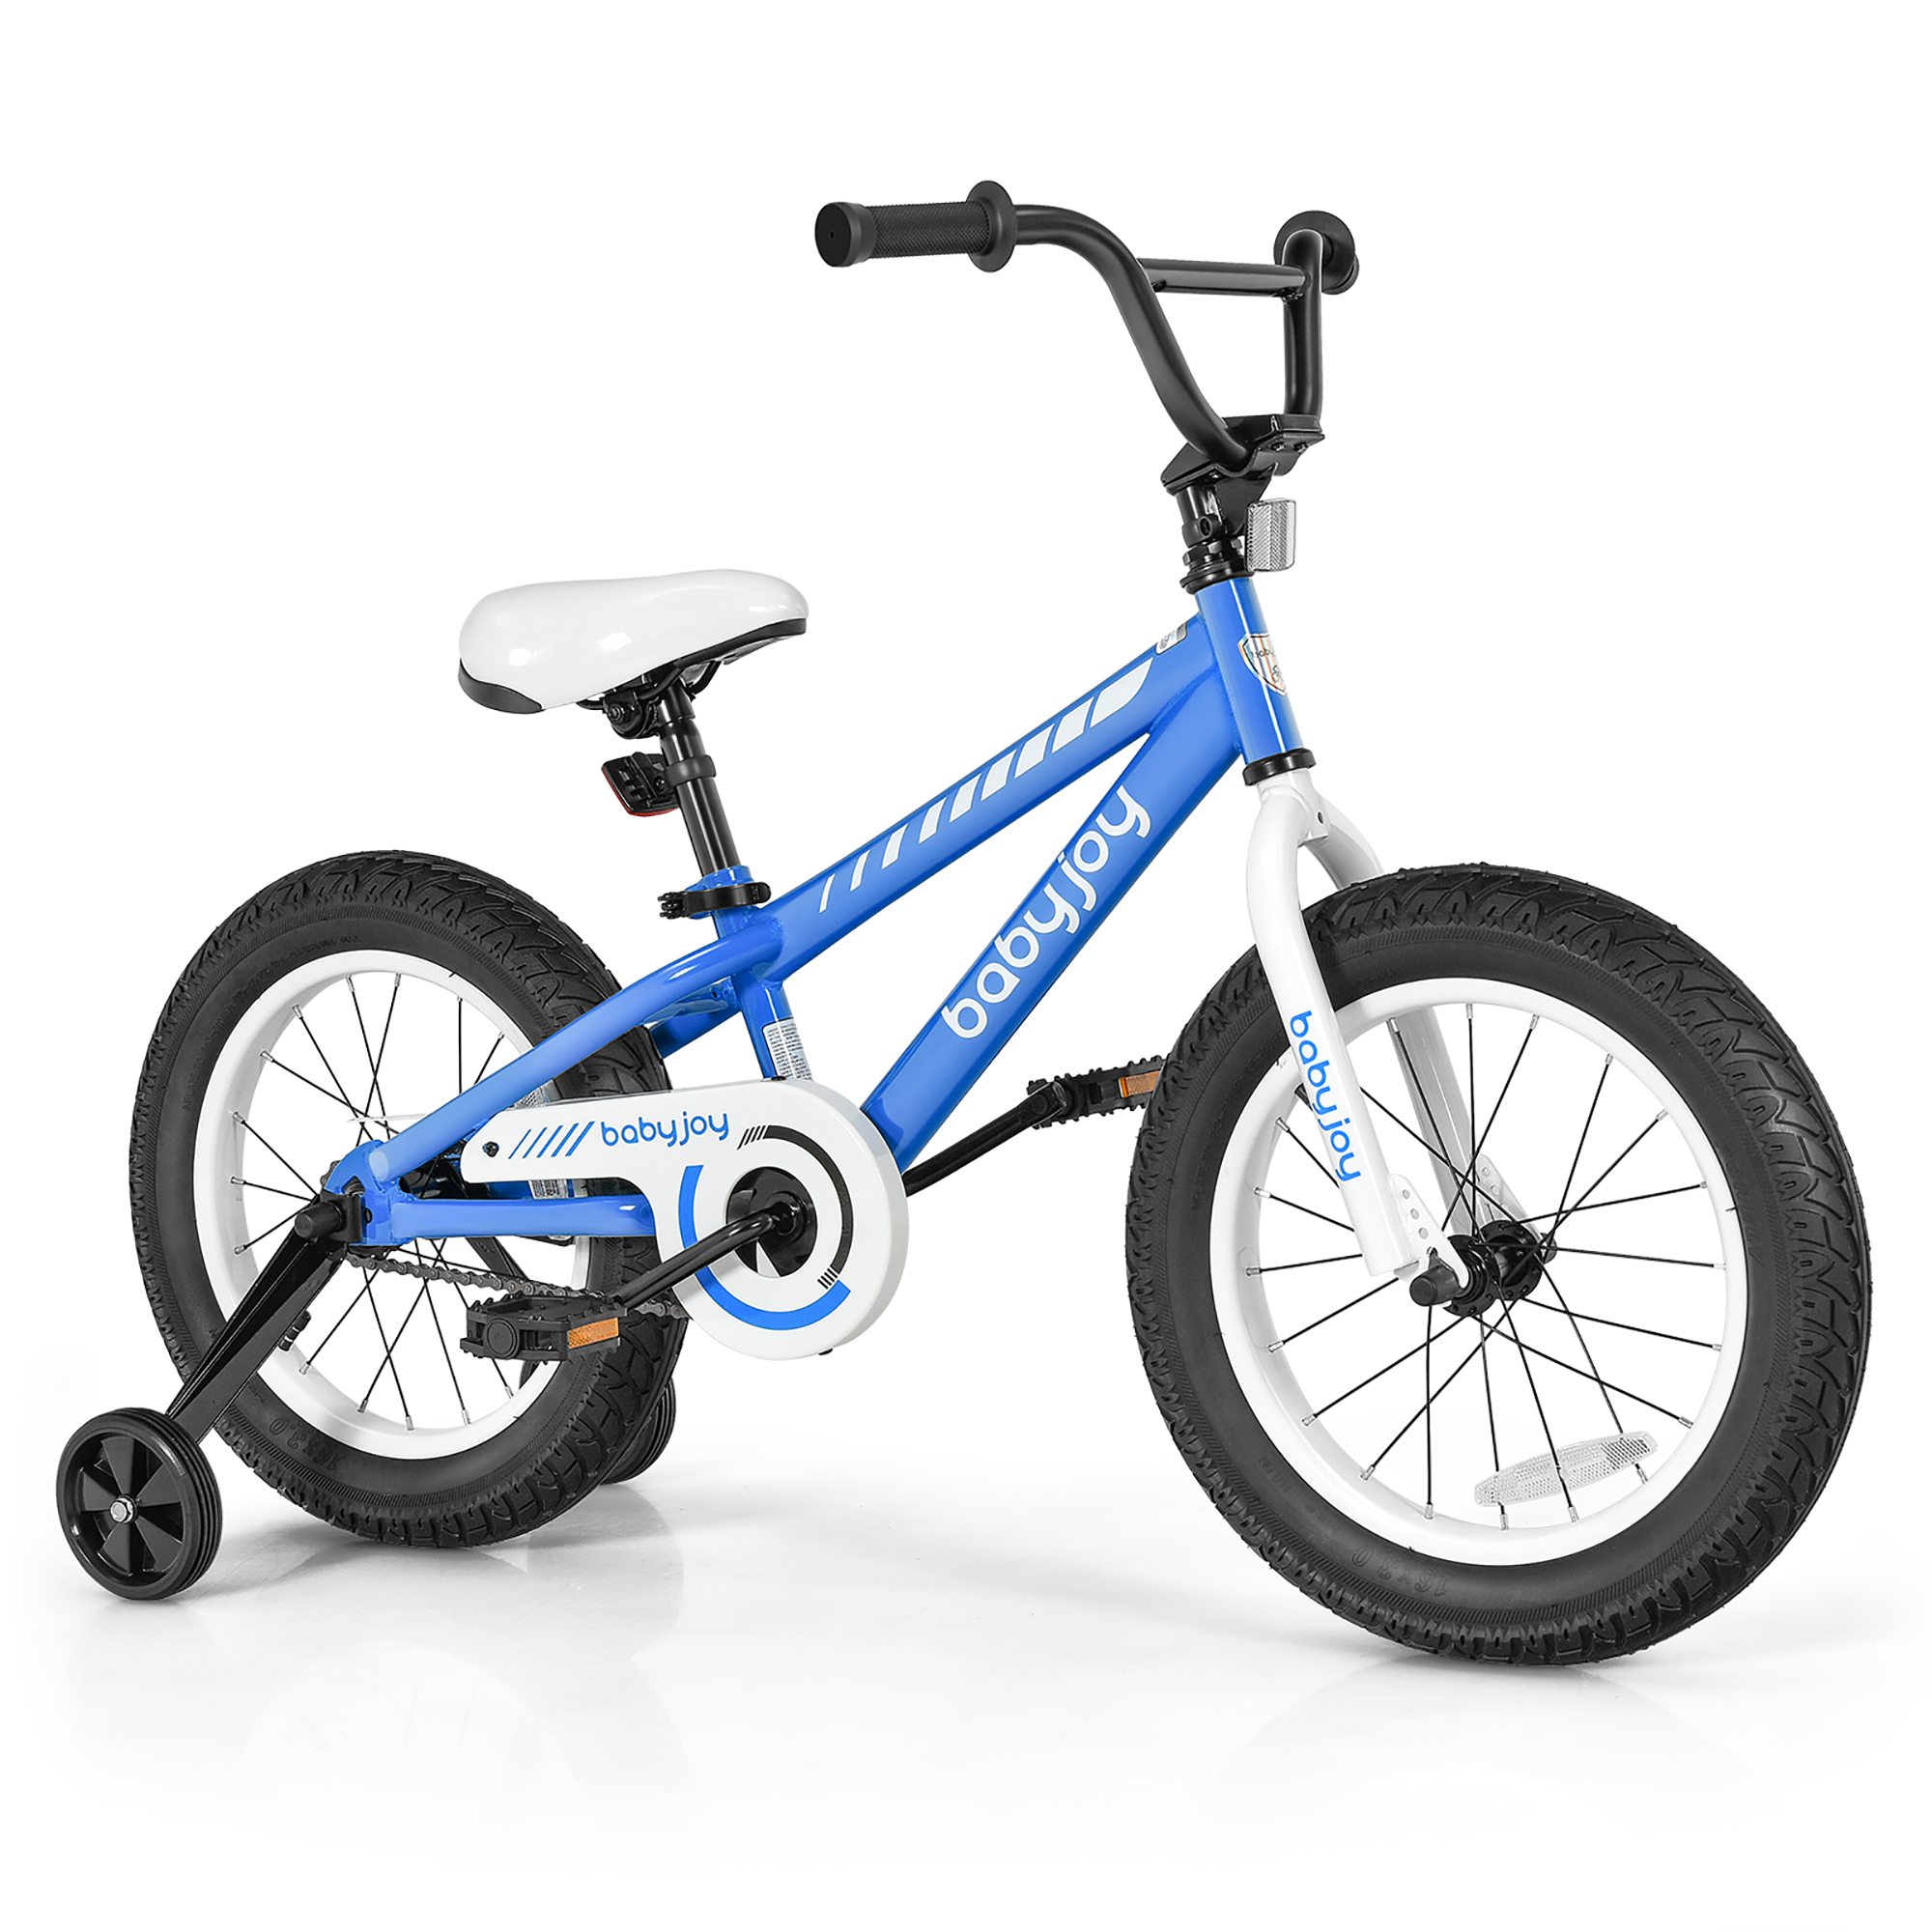 Costway Babyjoy 16'' Kids Bike Bicycle w/ Training Wheels for 5-8 Years Old Girls Boys